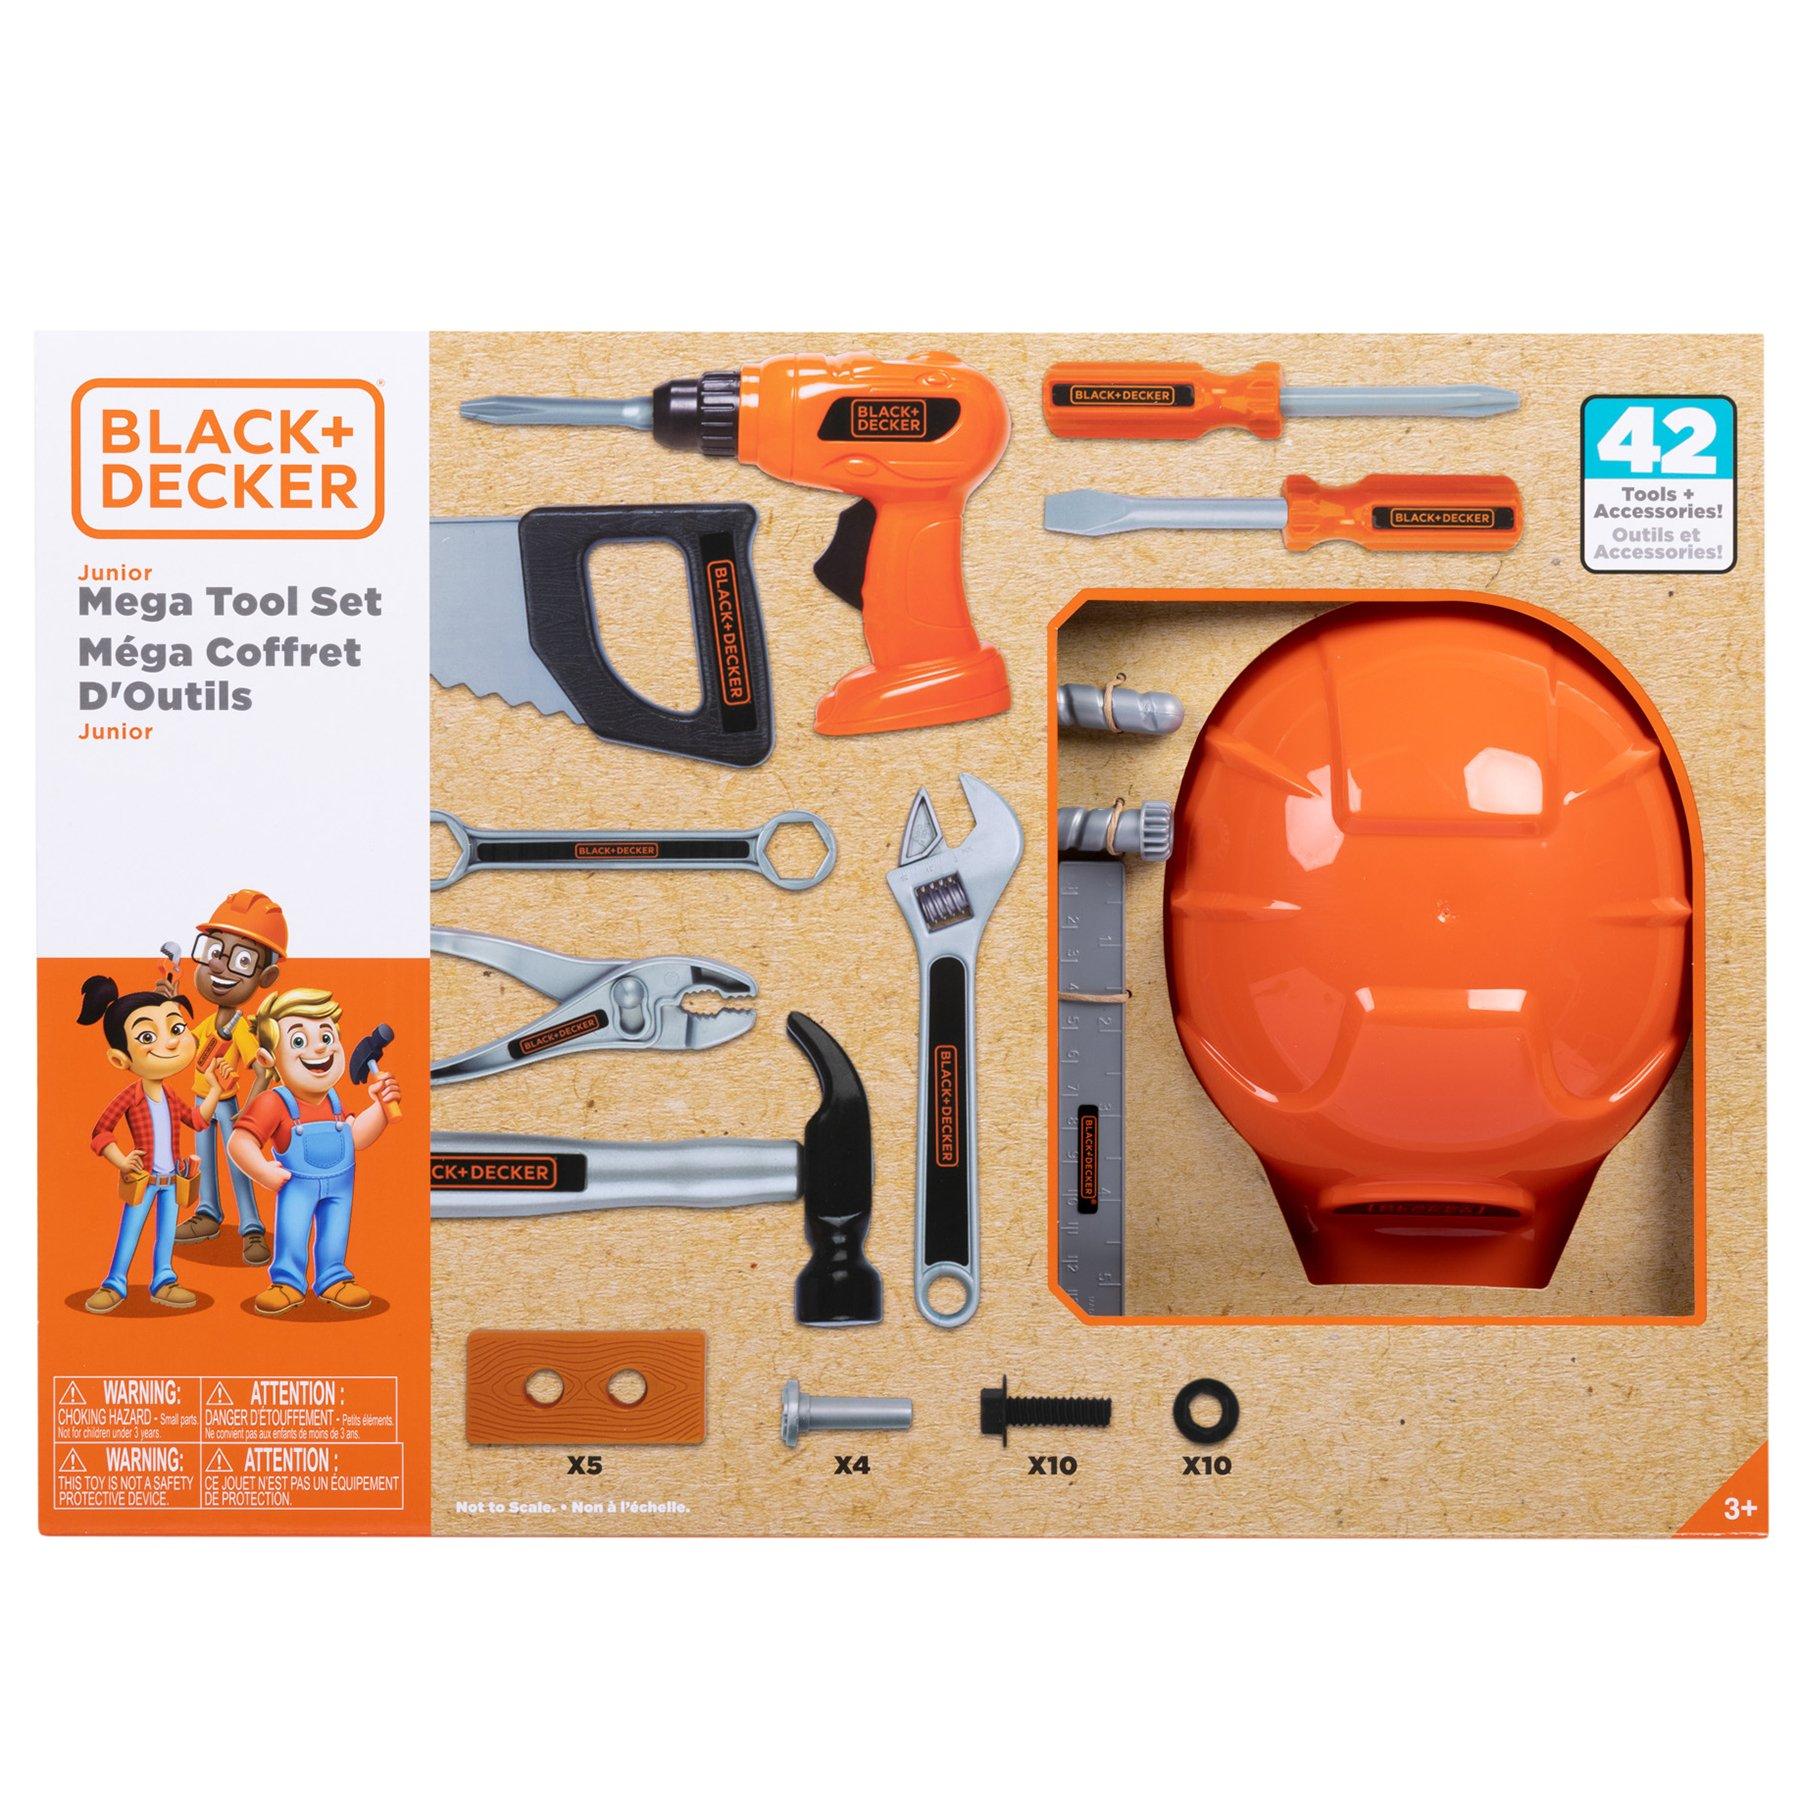 Black + Decker Junior Kids Tool Set - Mega Tool Set with 42 Tools